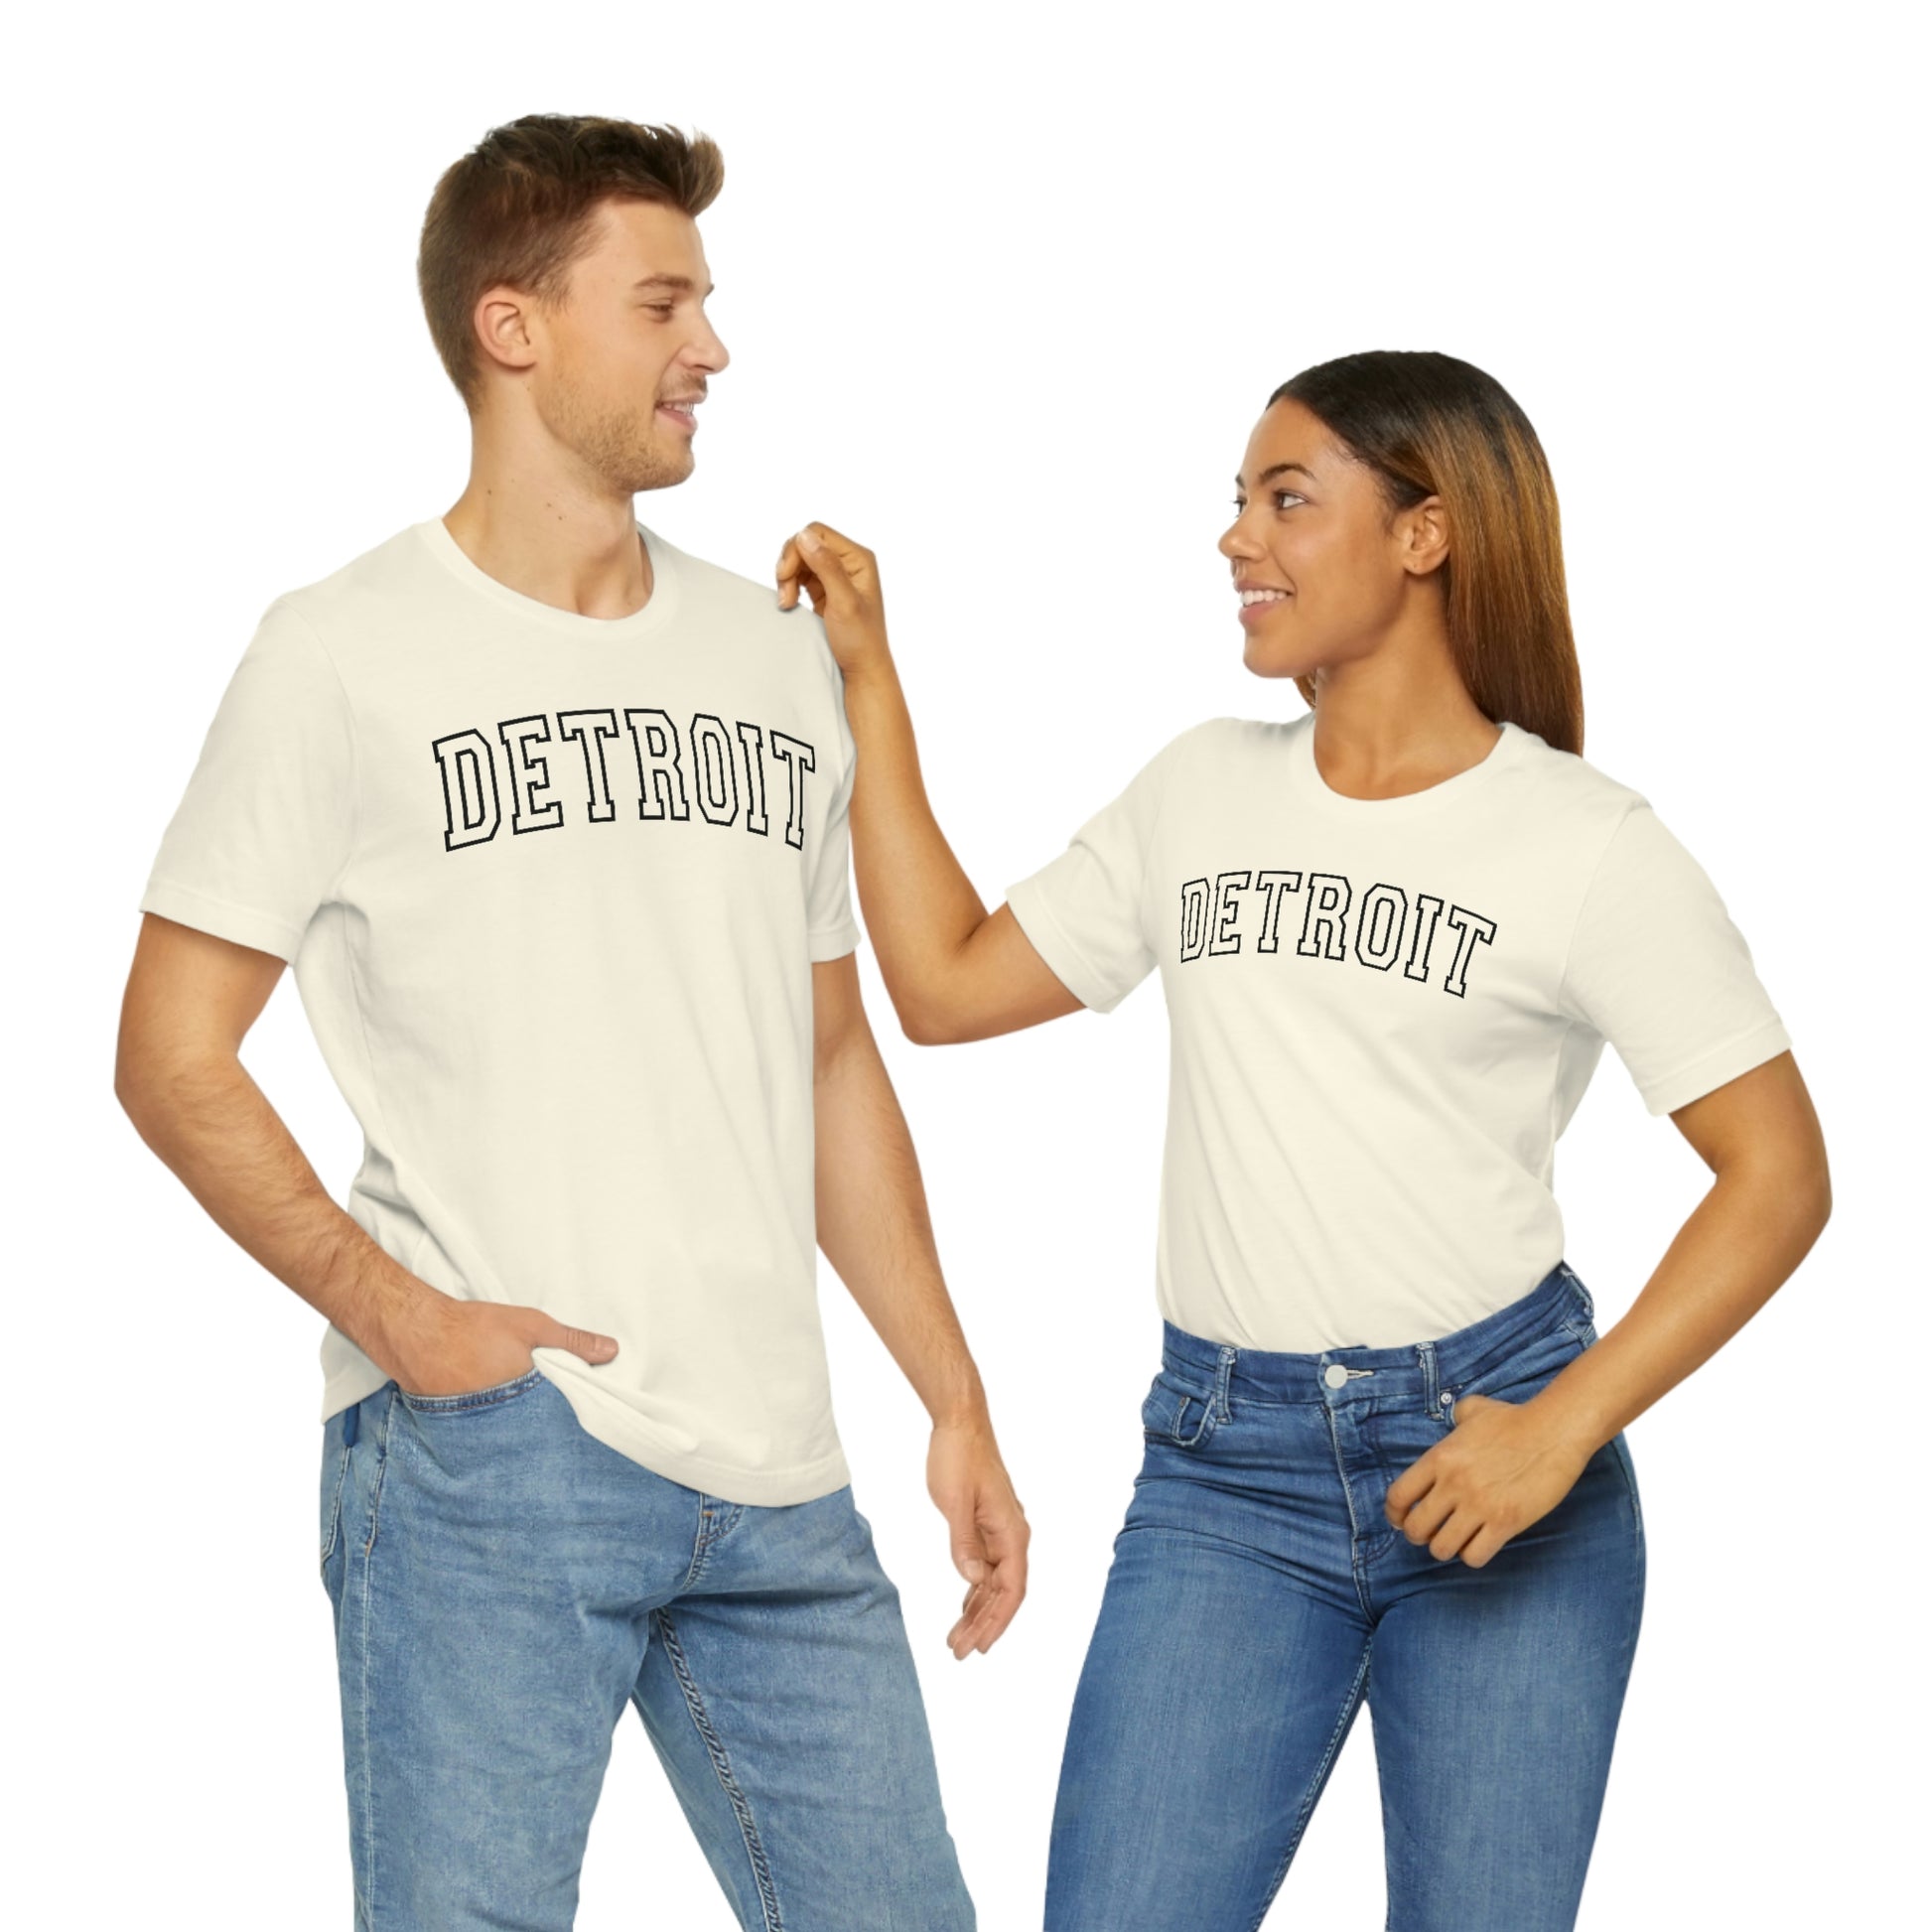 Detroit Varsity Letters Arch Short Sleeve T-shirt